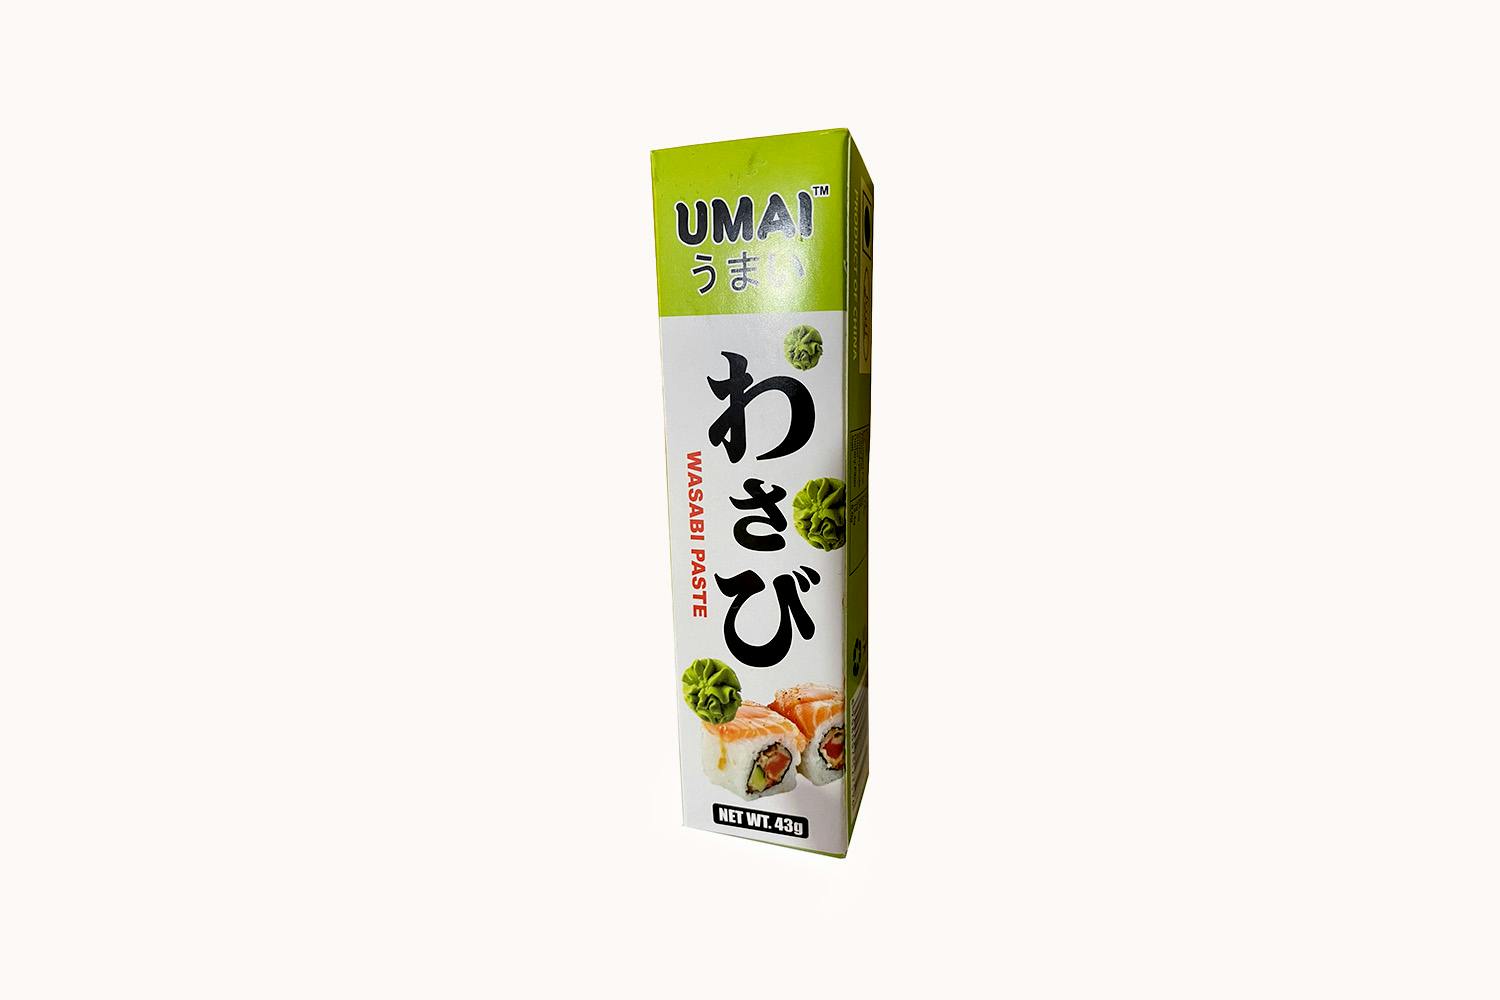 UMAI Wasabi Paste